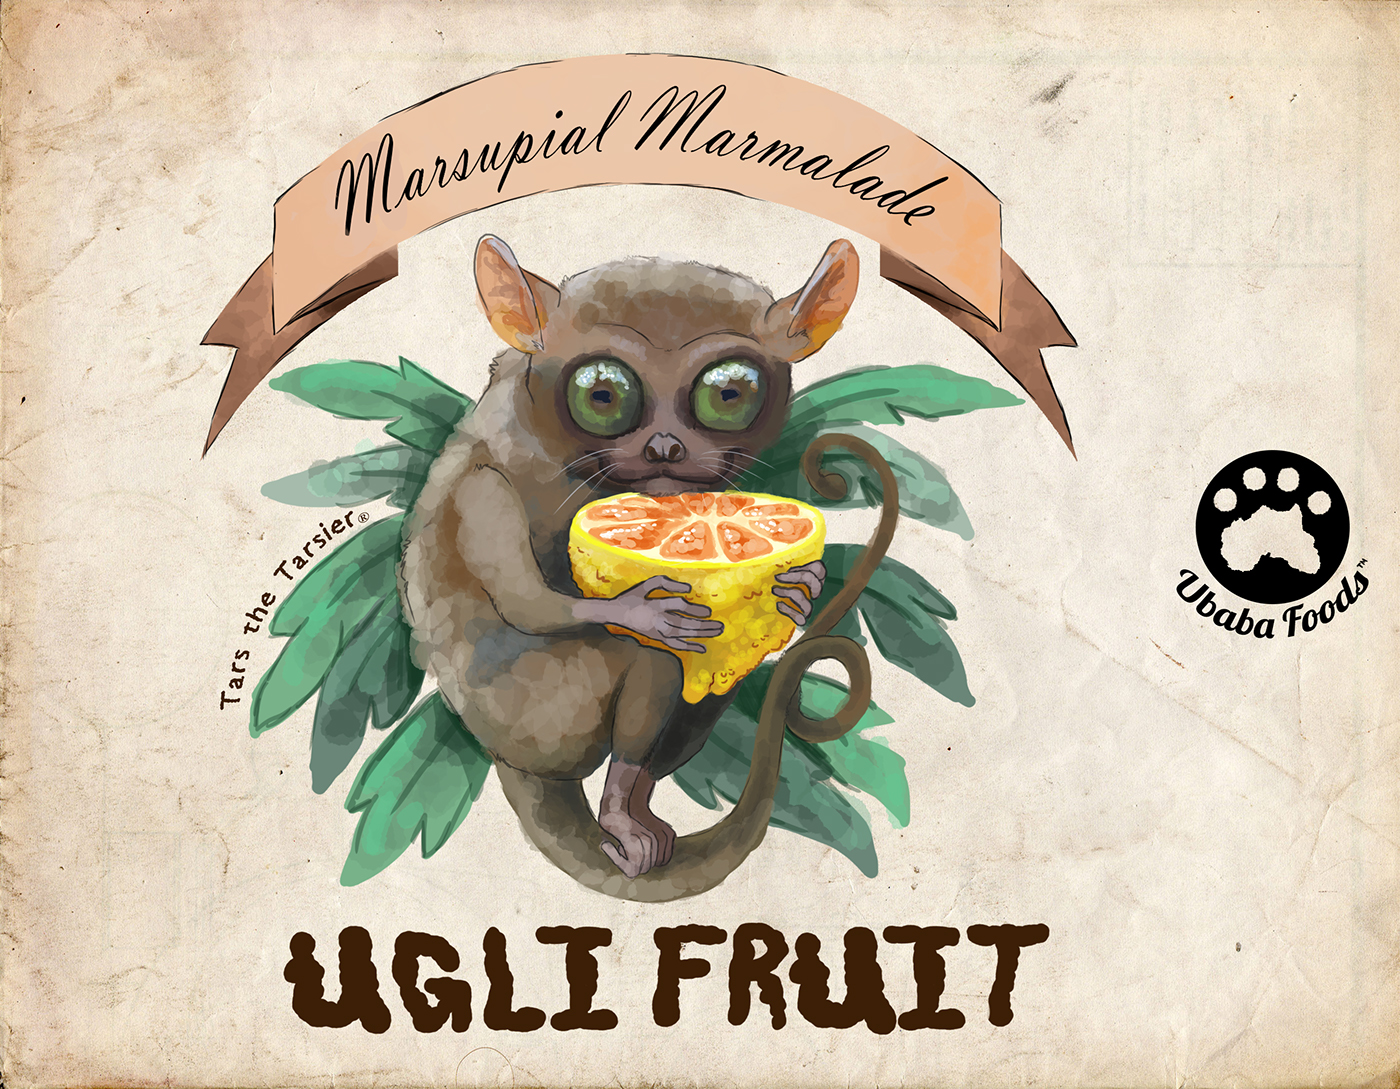 animal tarsier marsupial jam jelly Label advertisement